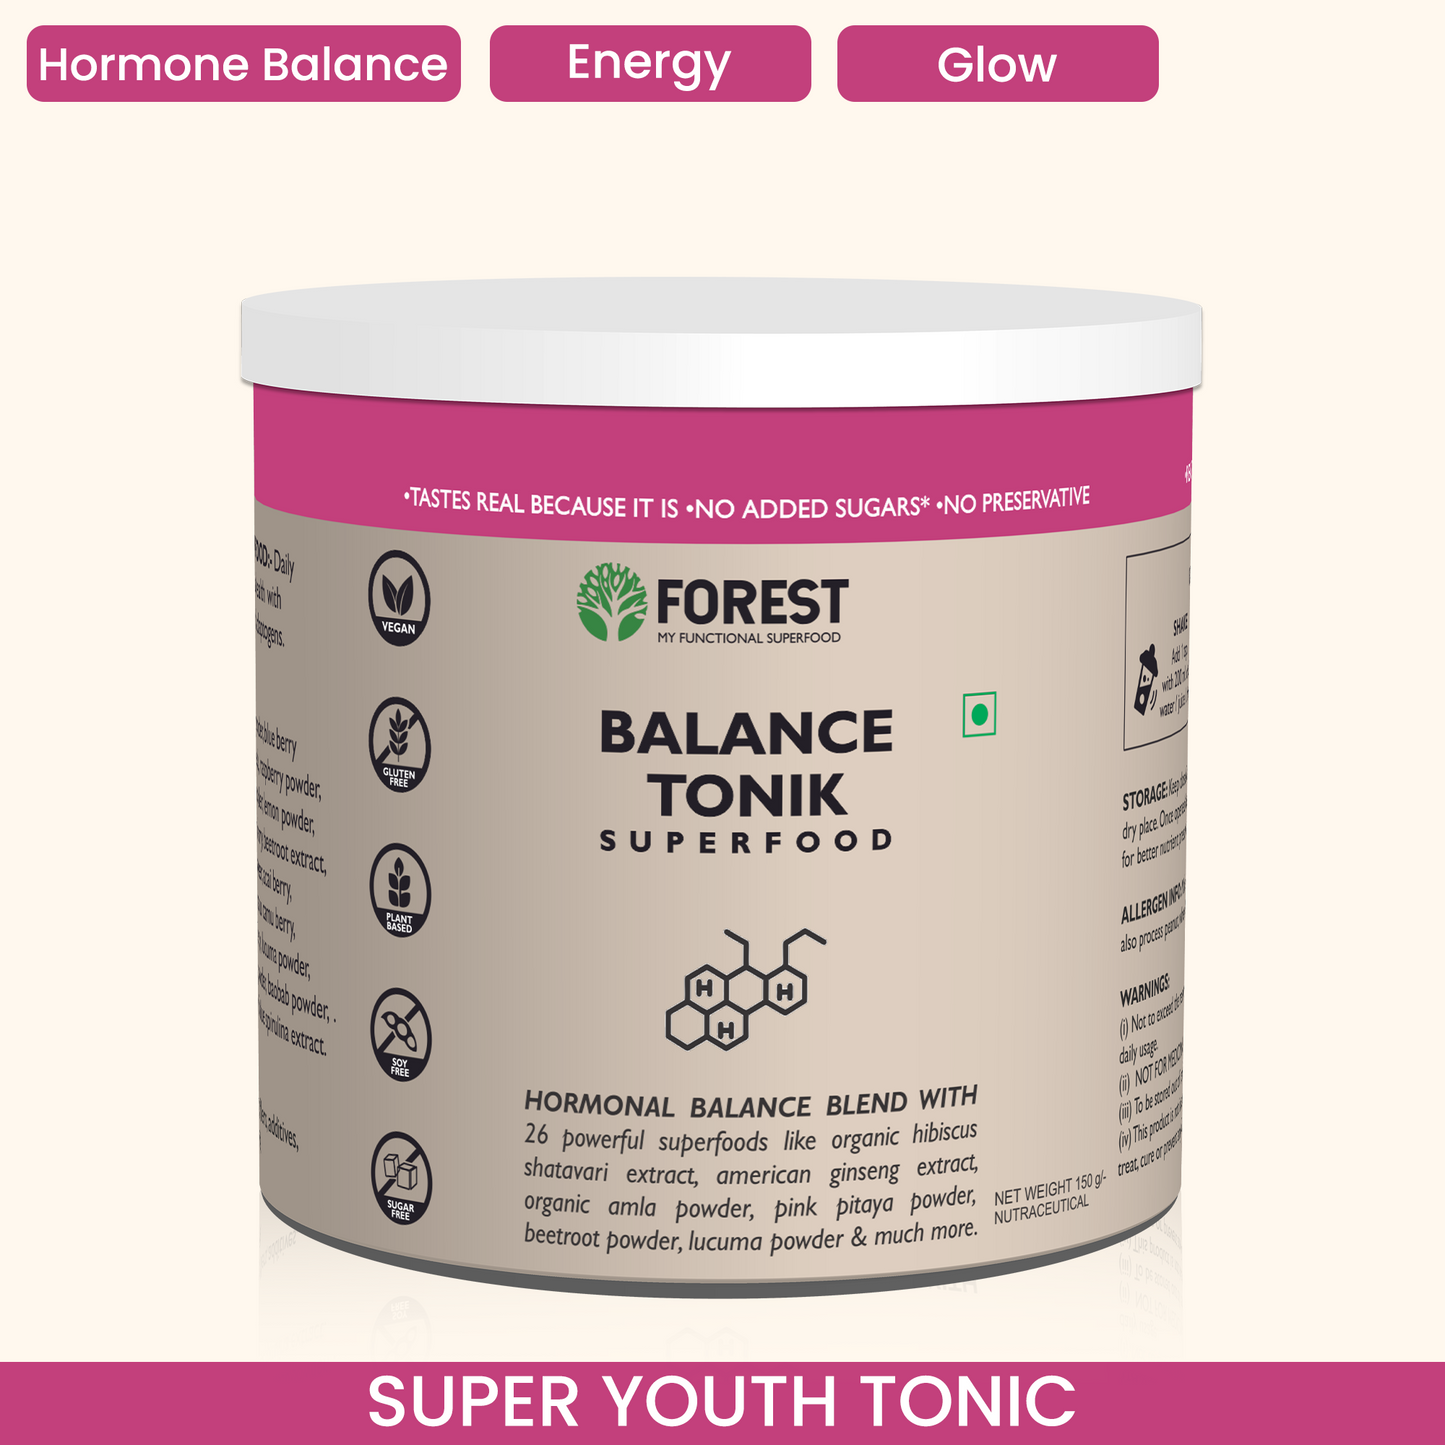 Balance Tonik Superfood | Hormonal Balance Blend With 26 Powerful Superfood.